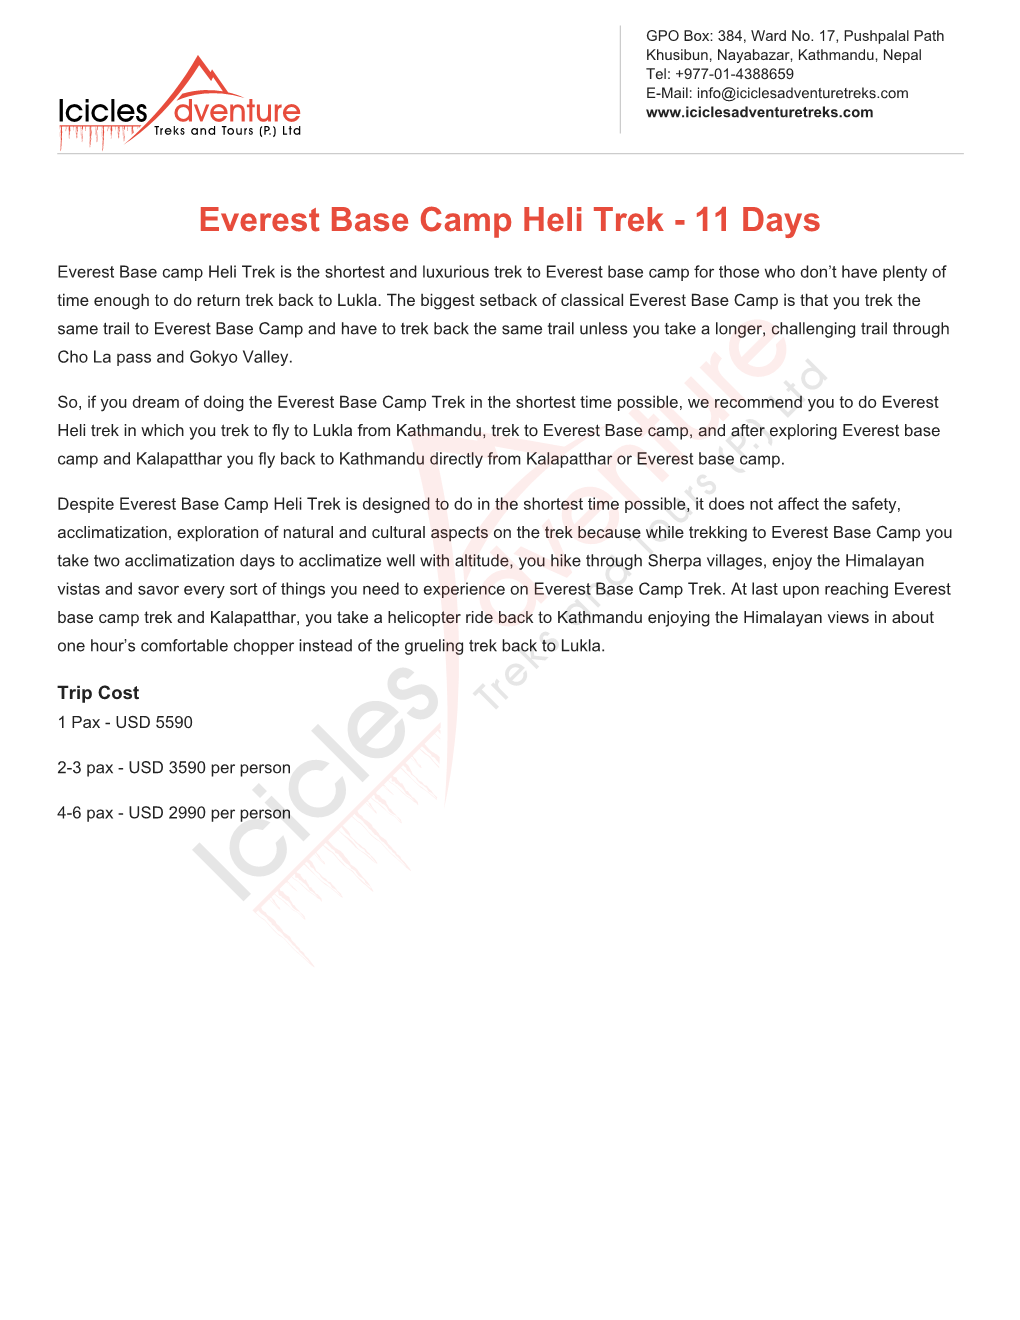 Everest Base Camp Heli Trek - 11 Days